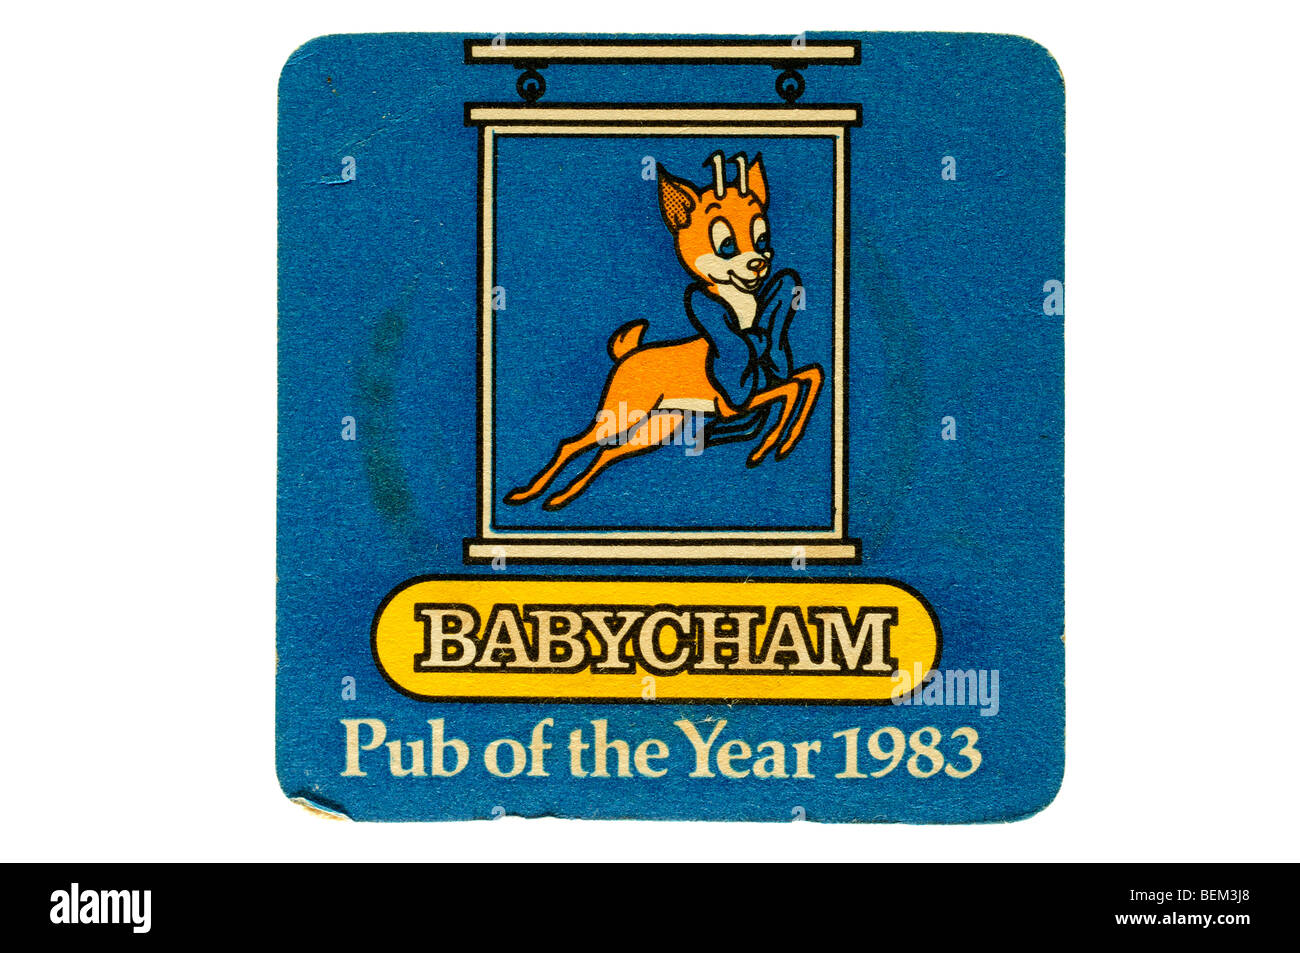 babycham pub of the year 1983 Stock Photo